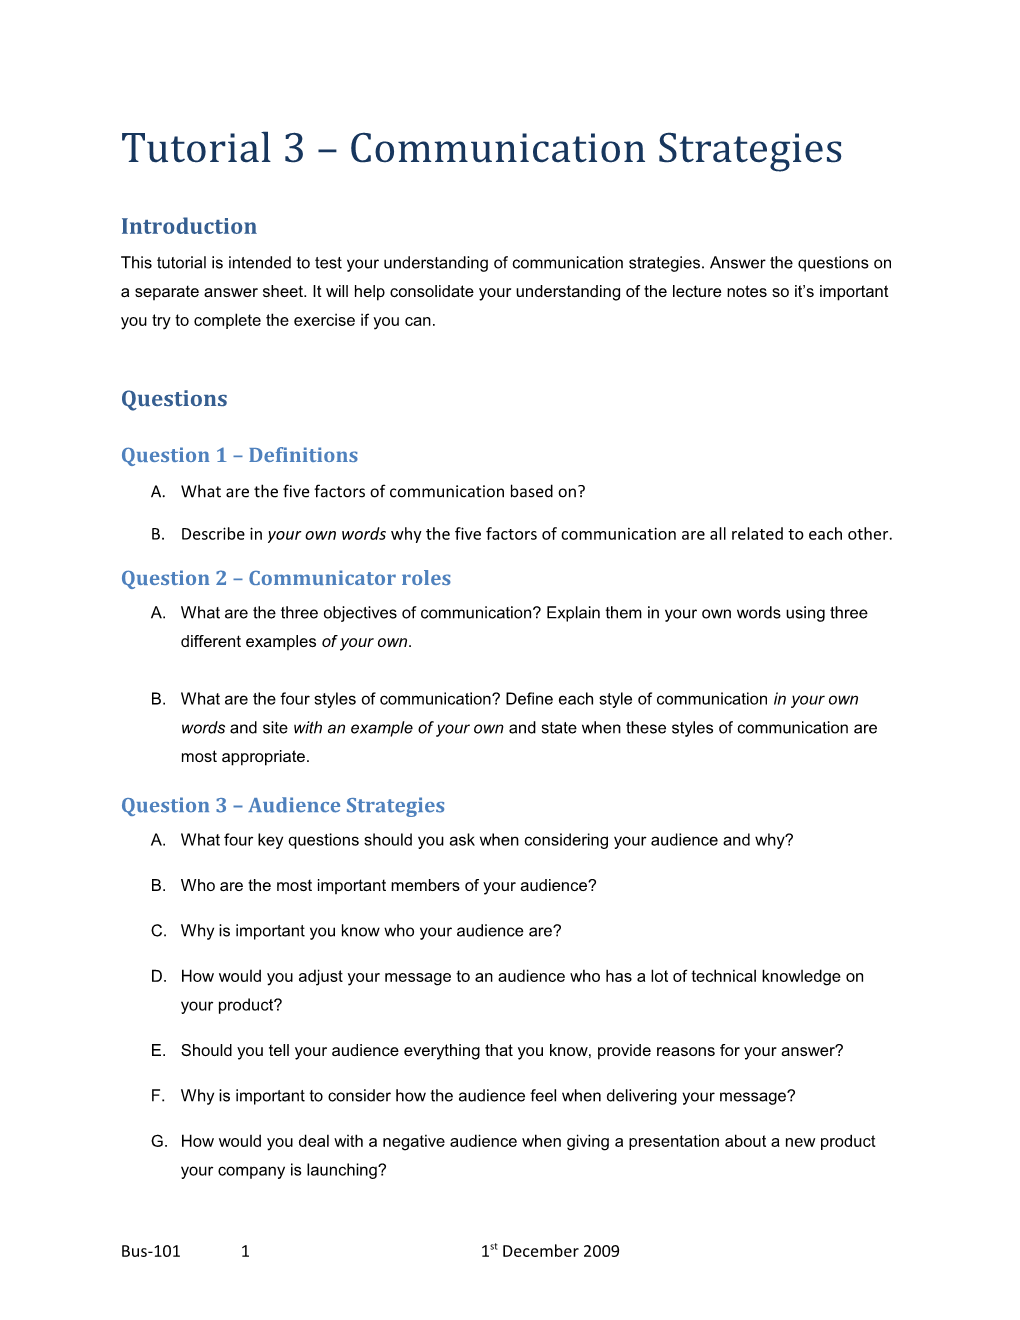 Tutorial 3 Communication Strategies